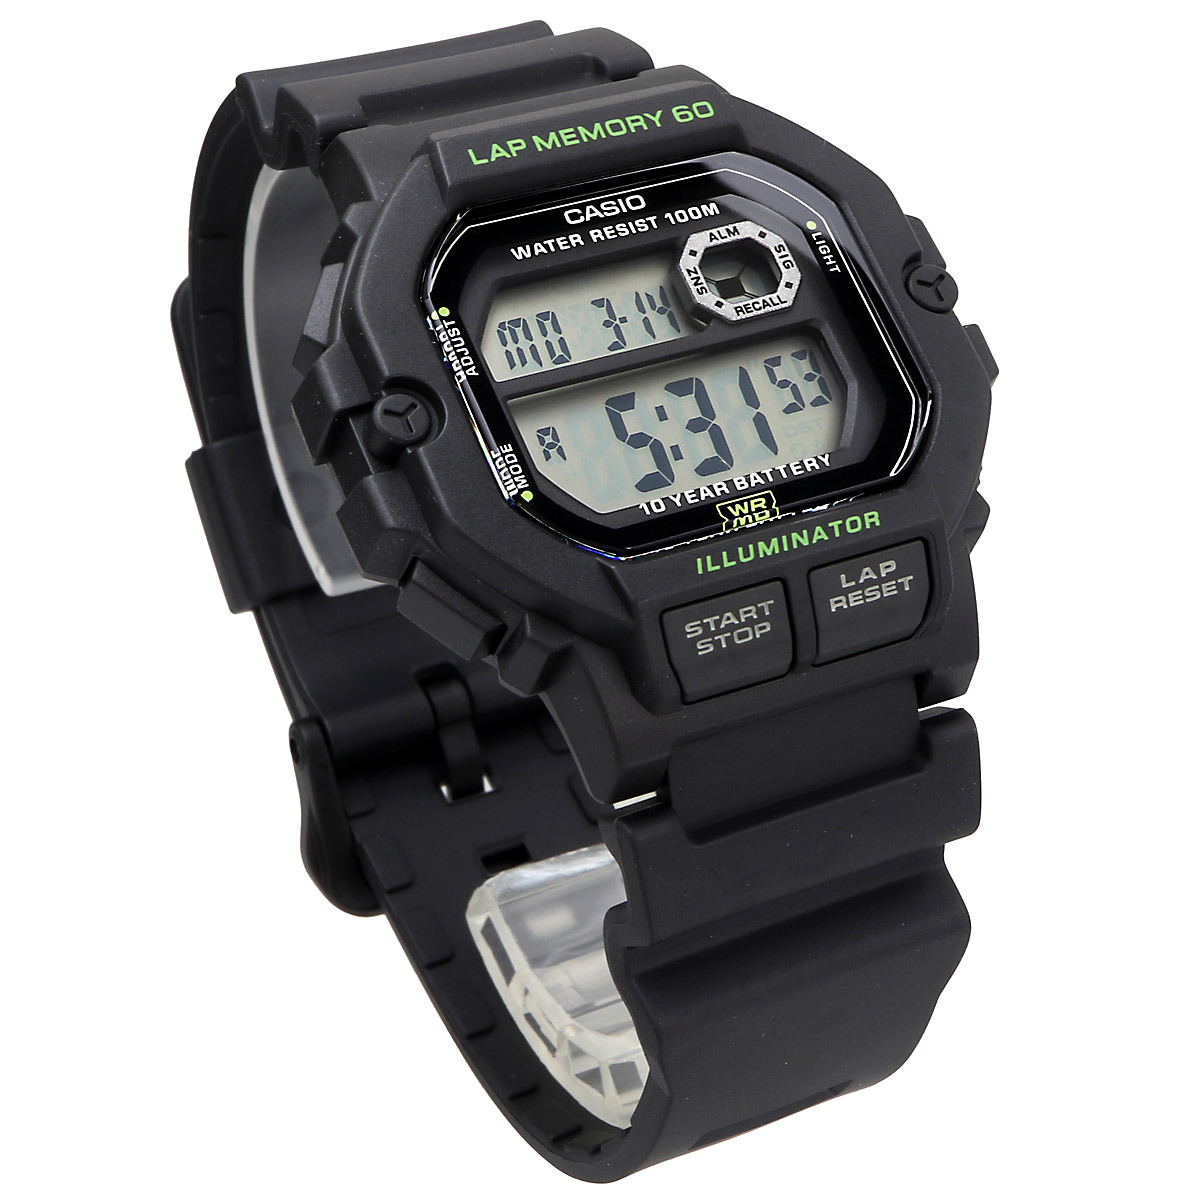 CASIO カシオ 腕時計 メンズ チープカシオ チプカシ 海外モデル 60ラップメモリ ランニング WS-1400H-1AV_画像4